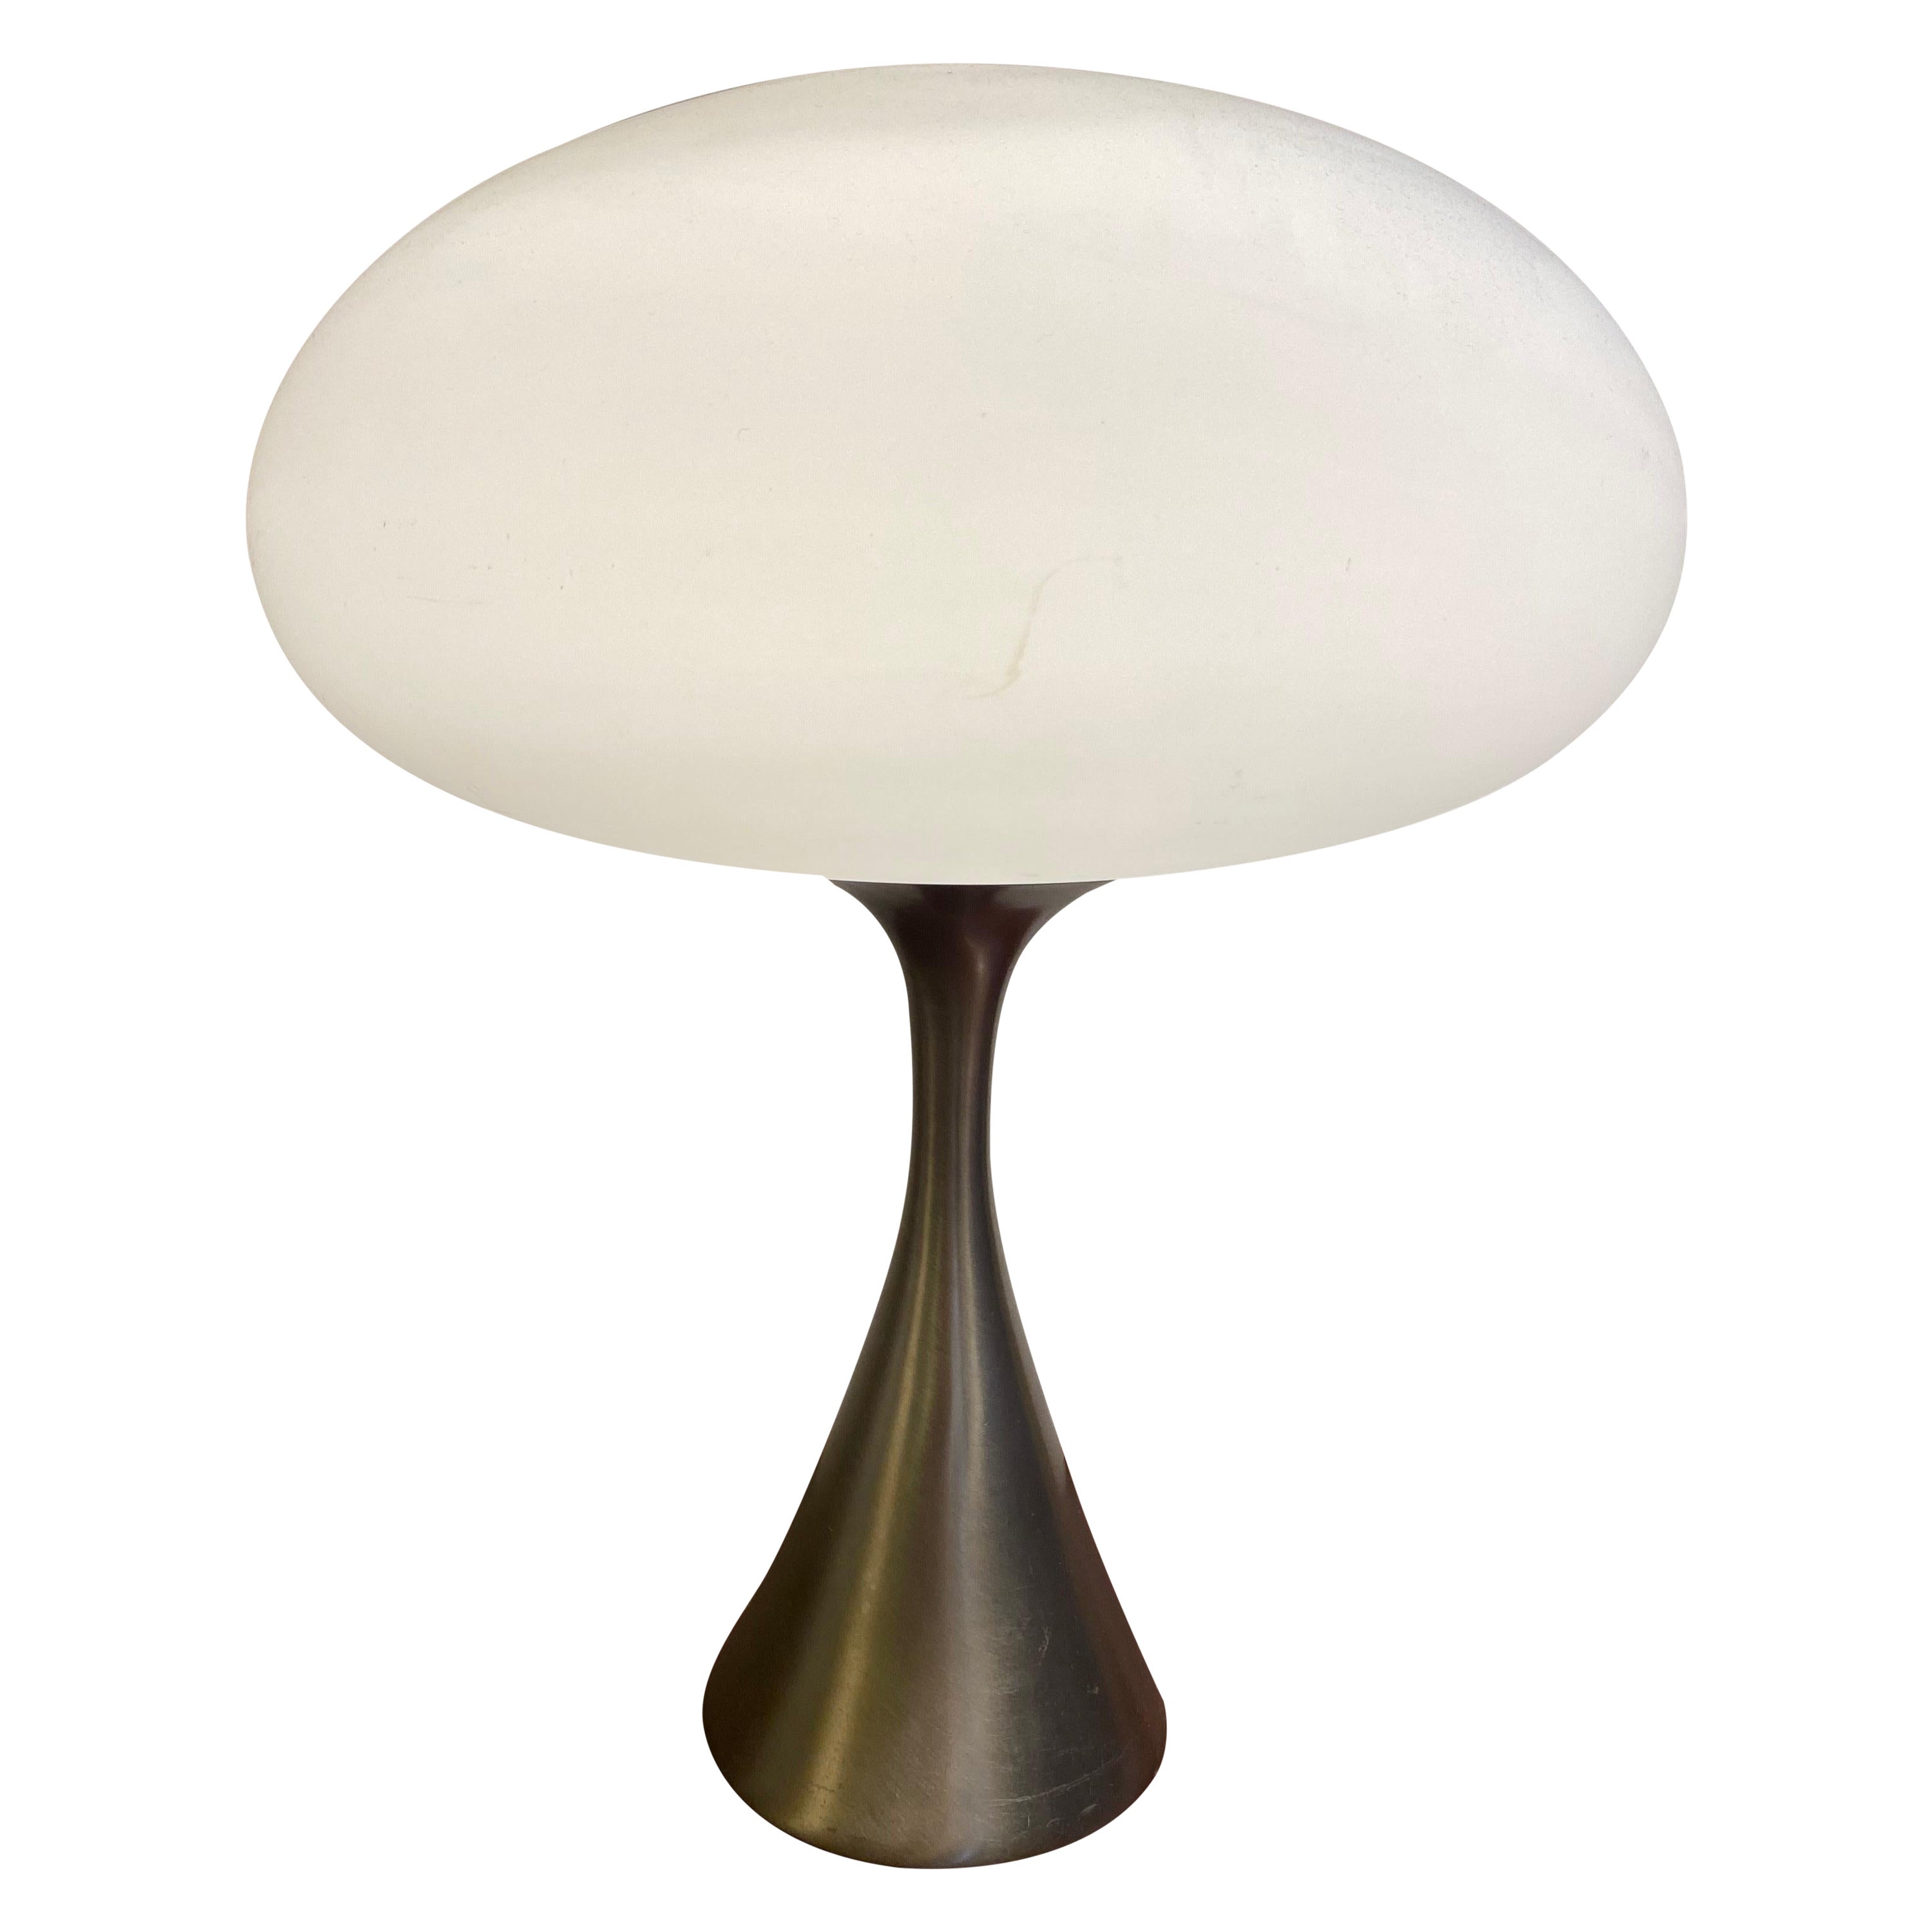 Original Stainless Laurel Mushroom Table Lamp For Sale